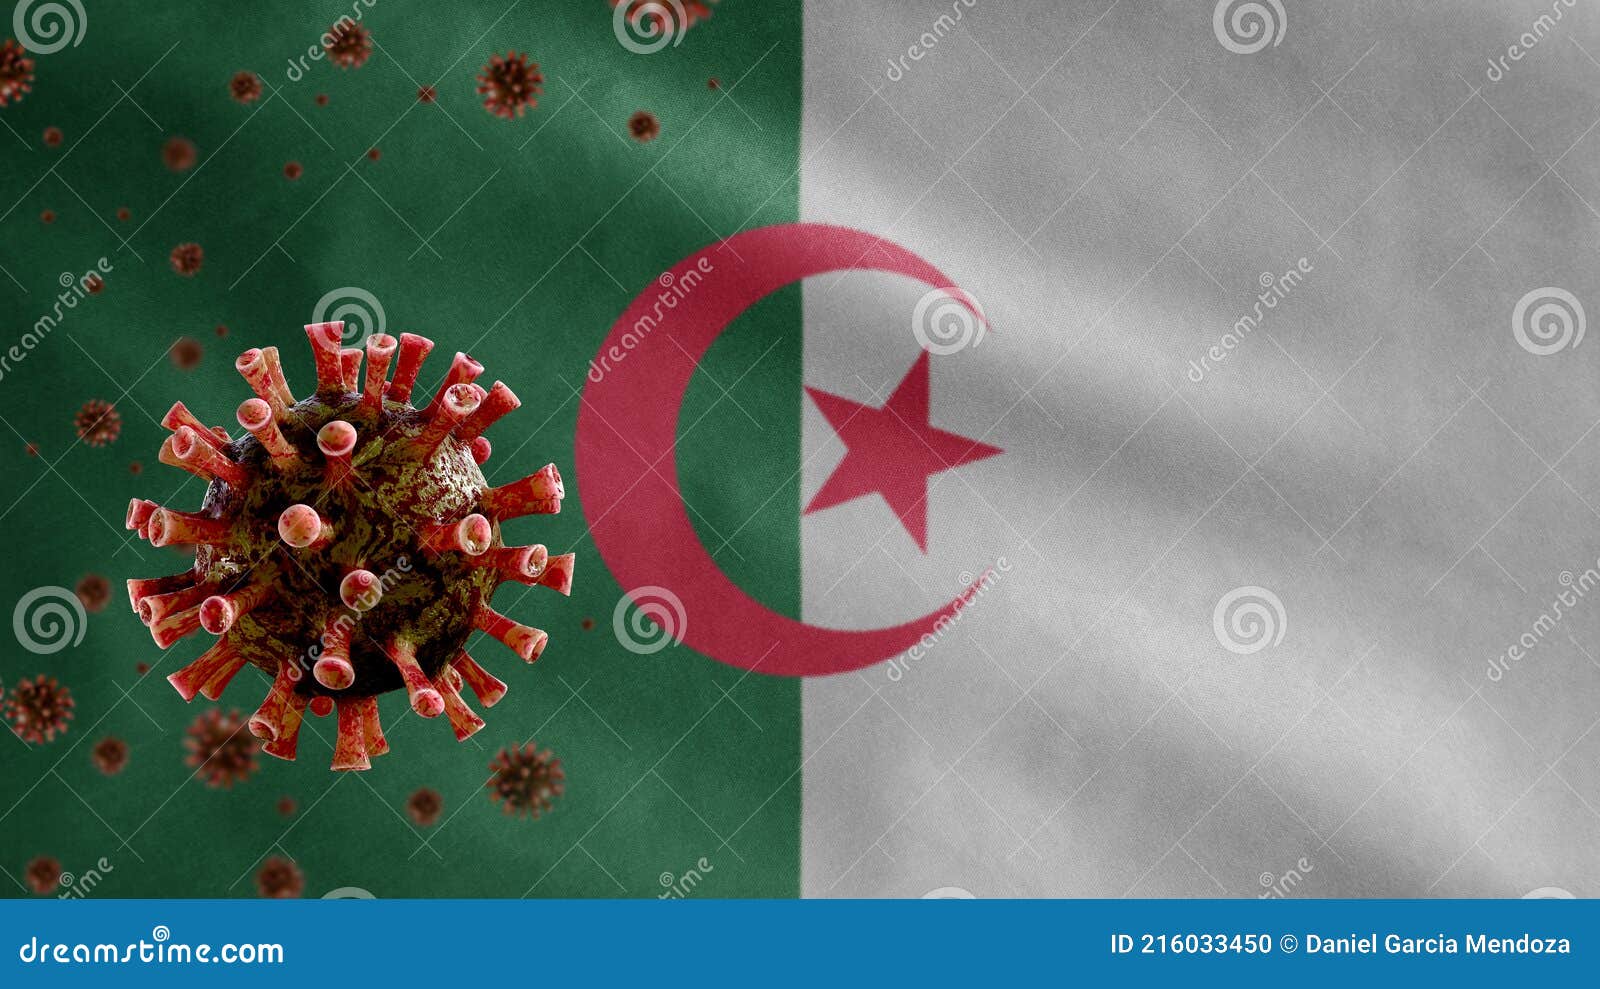 3d, algerian flag waving with coronavirus outbreak. pandemic covid 19 argelia